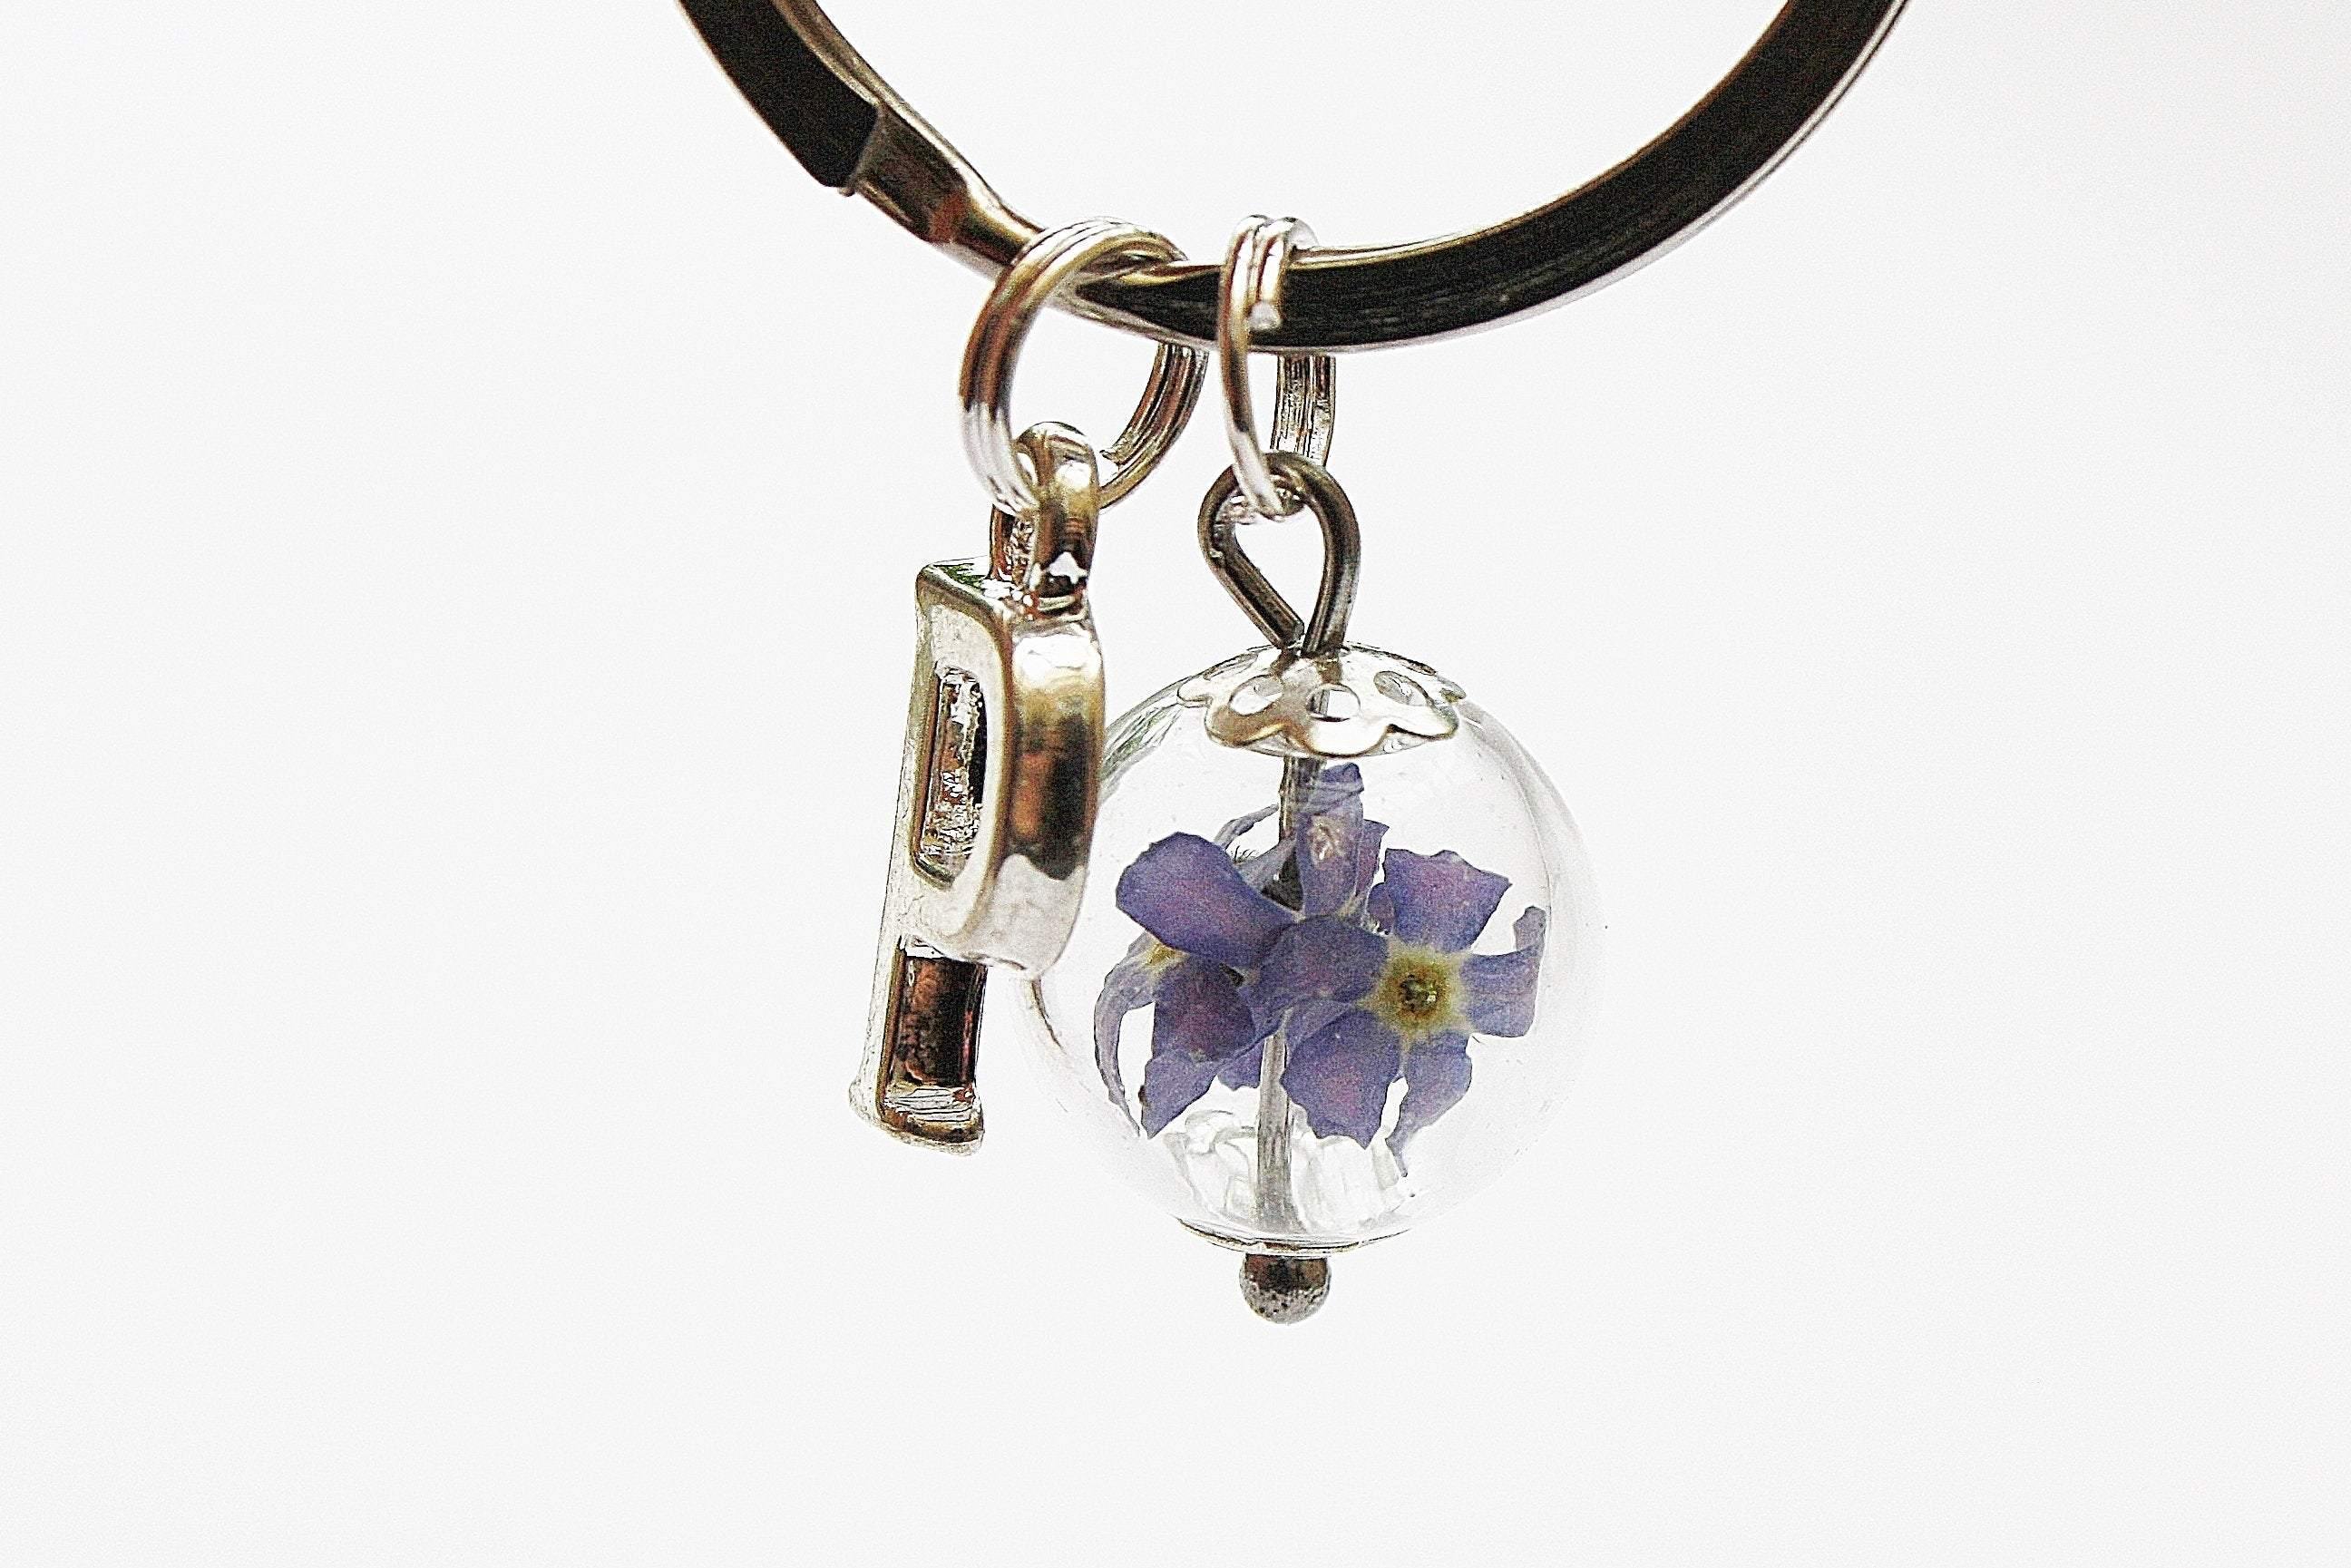 Echte Vergissmeinnicht Schlüsselanhänger Taschenanhänger key Chain real flowers Blütenanhänger Blumen Abschiedsgeschenk Abschied Geschenk